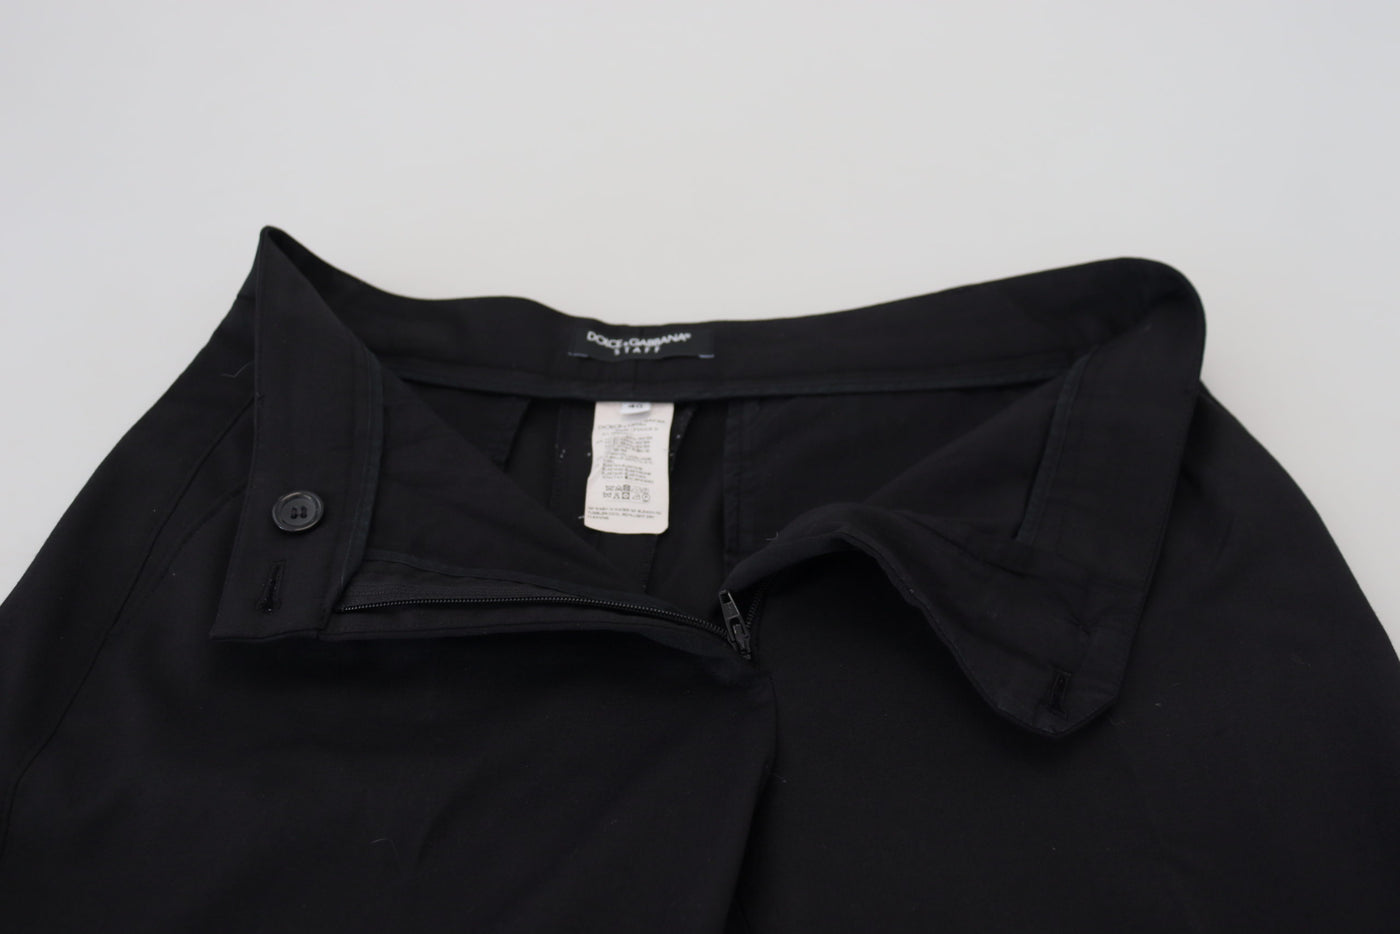 Dolce & Gabbana Black  Formal Tapered Pants